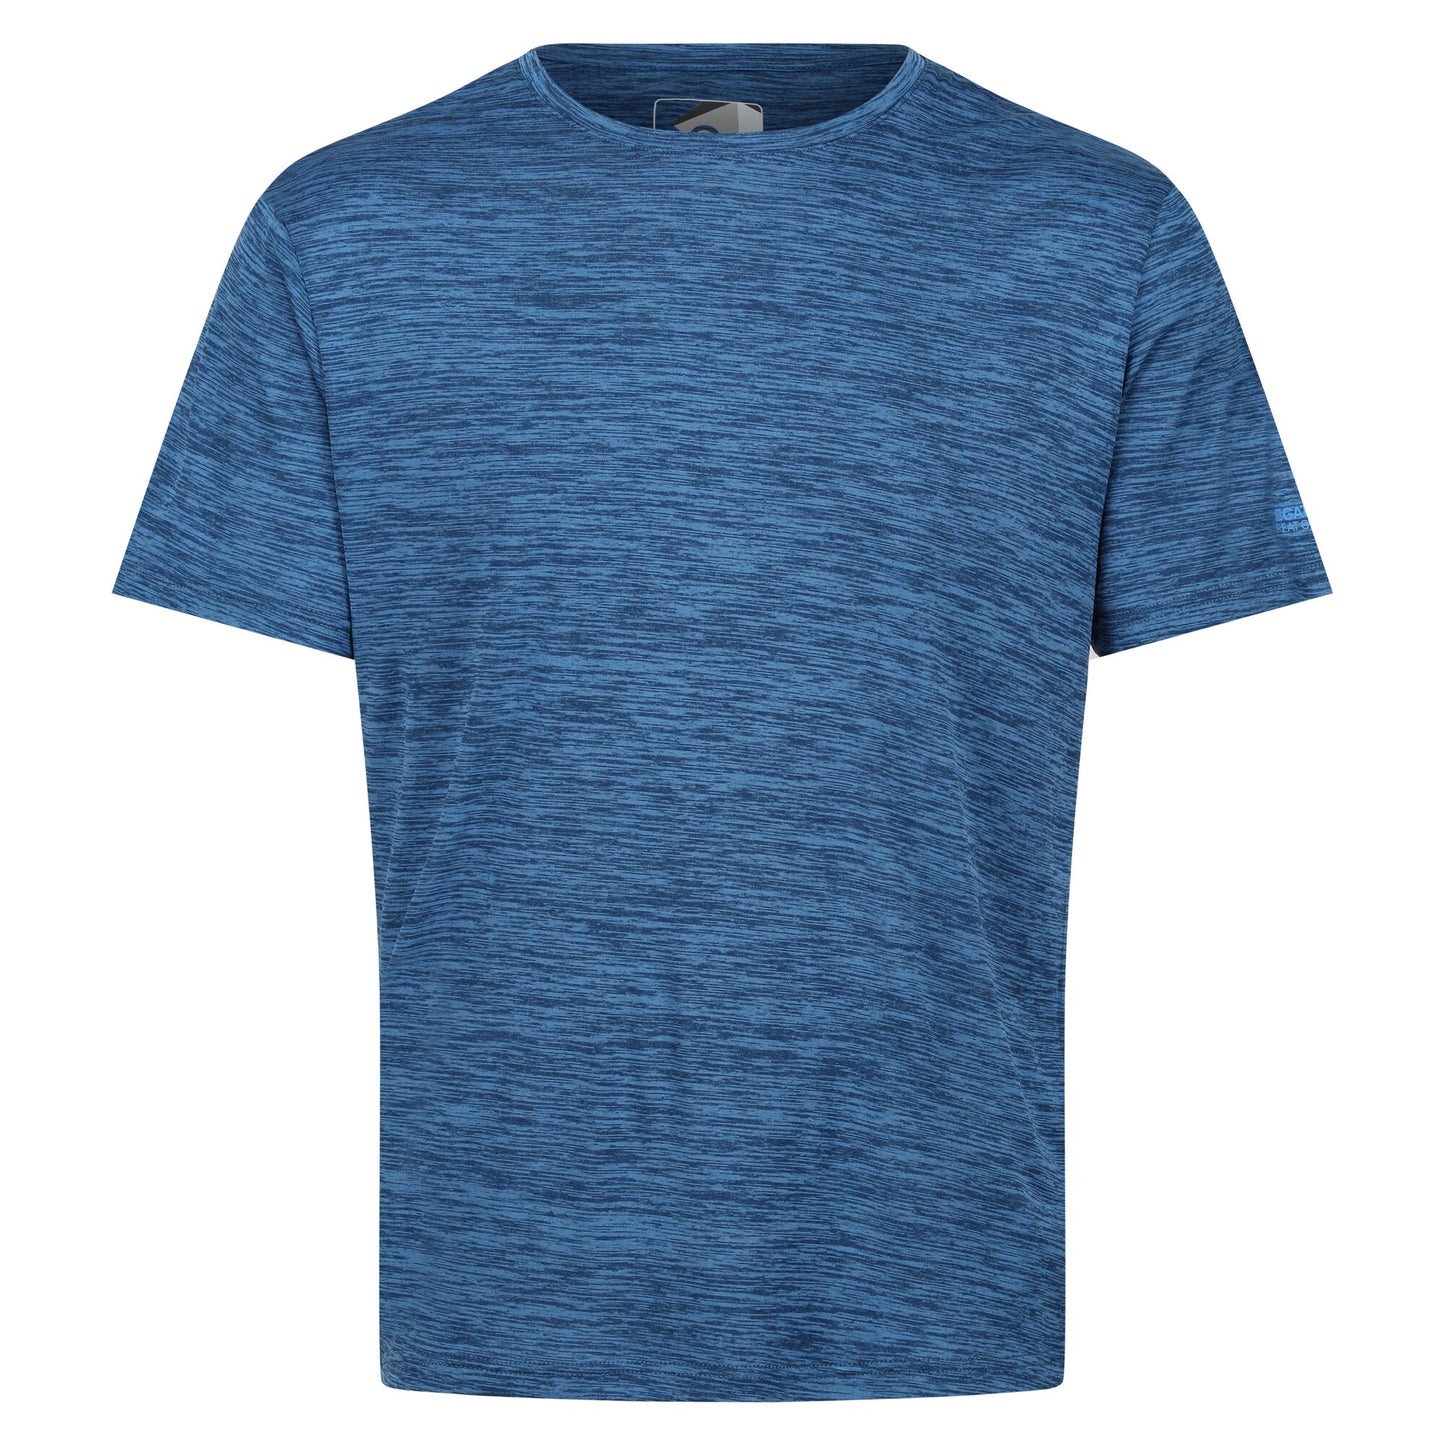 Regatta RMT237 I45 Fingal Edition Indigo Blue T-Shirt